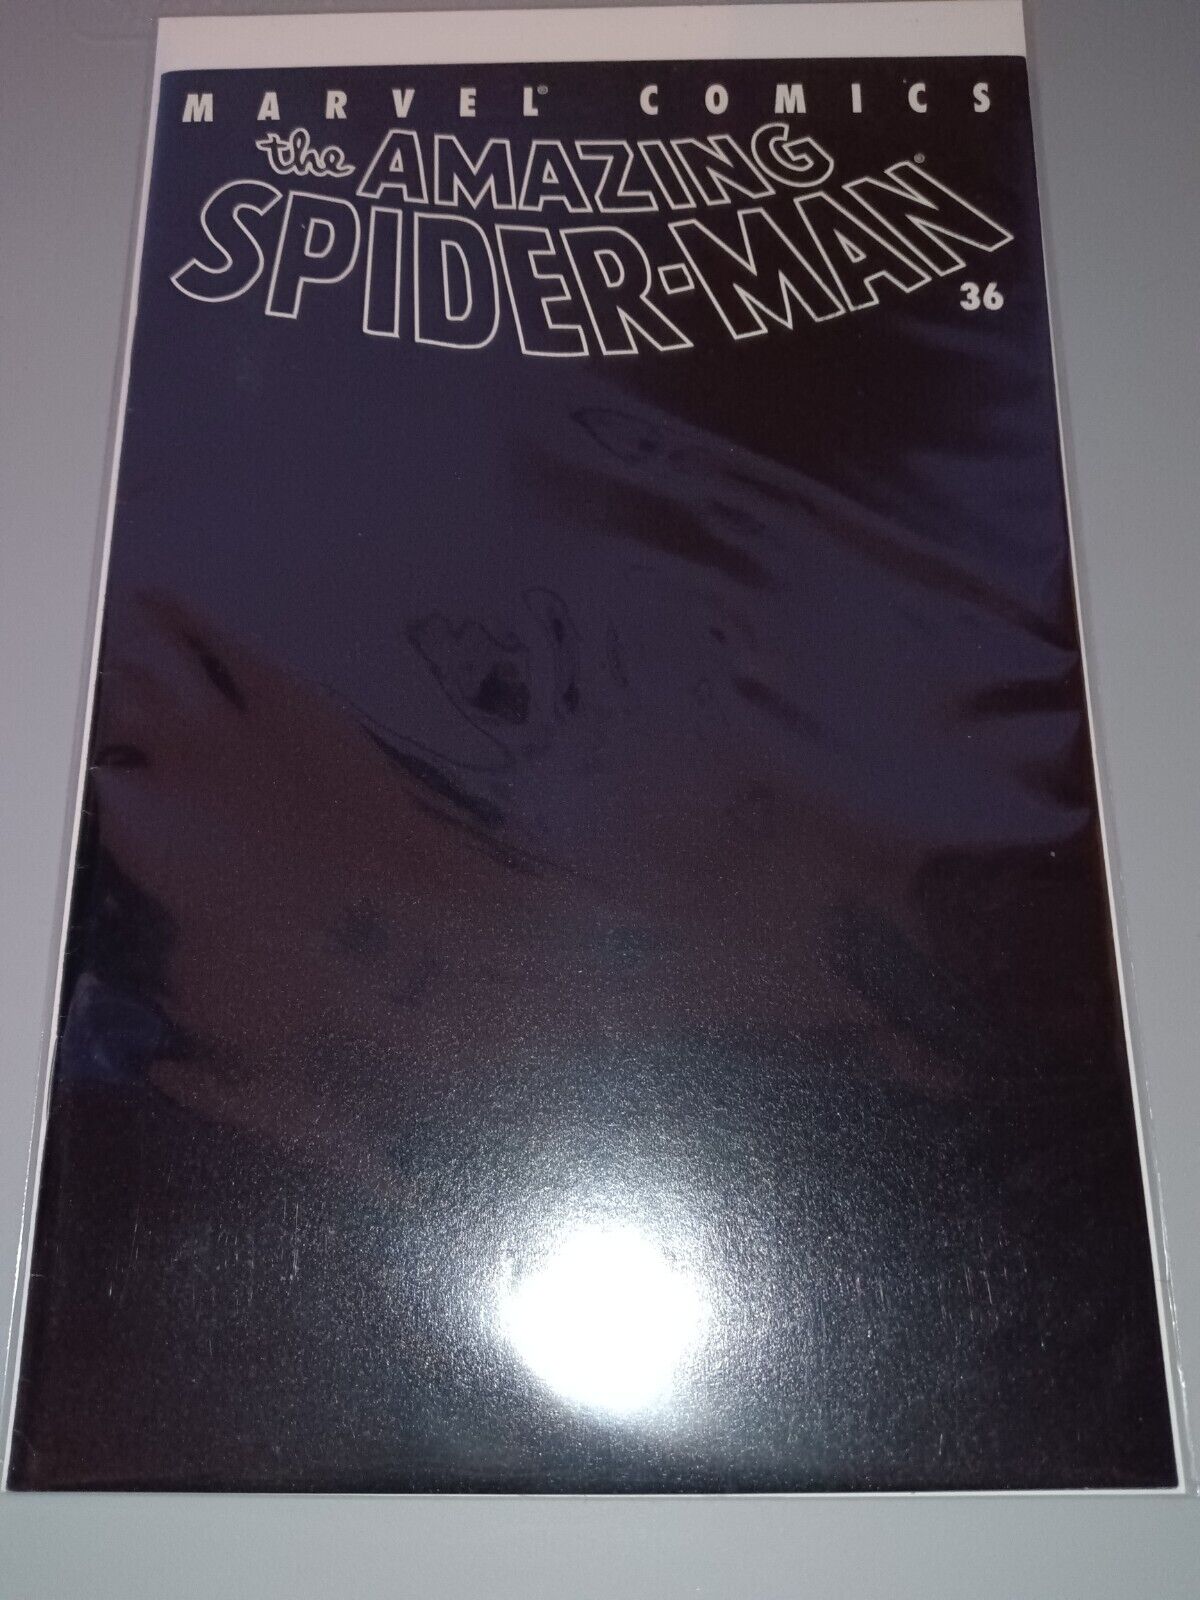 Amazing Spiderman #36 (2001) Marvel 911 World Trade Center Tribute Issue 